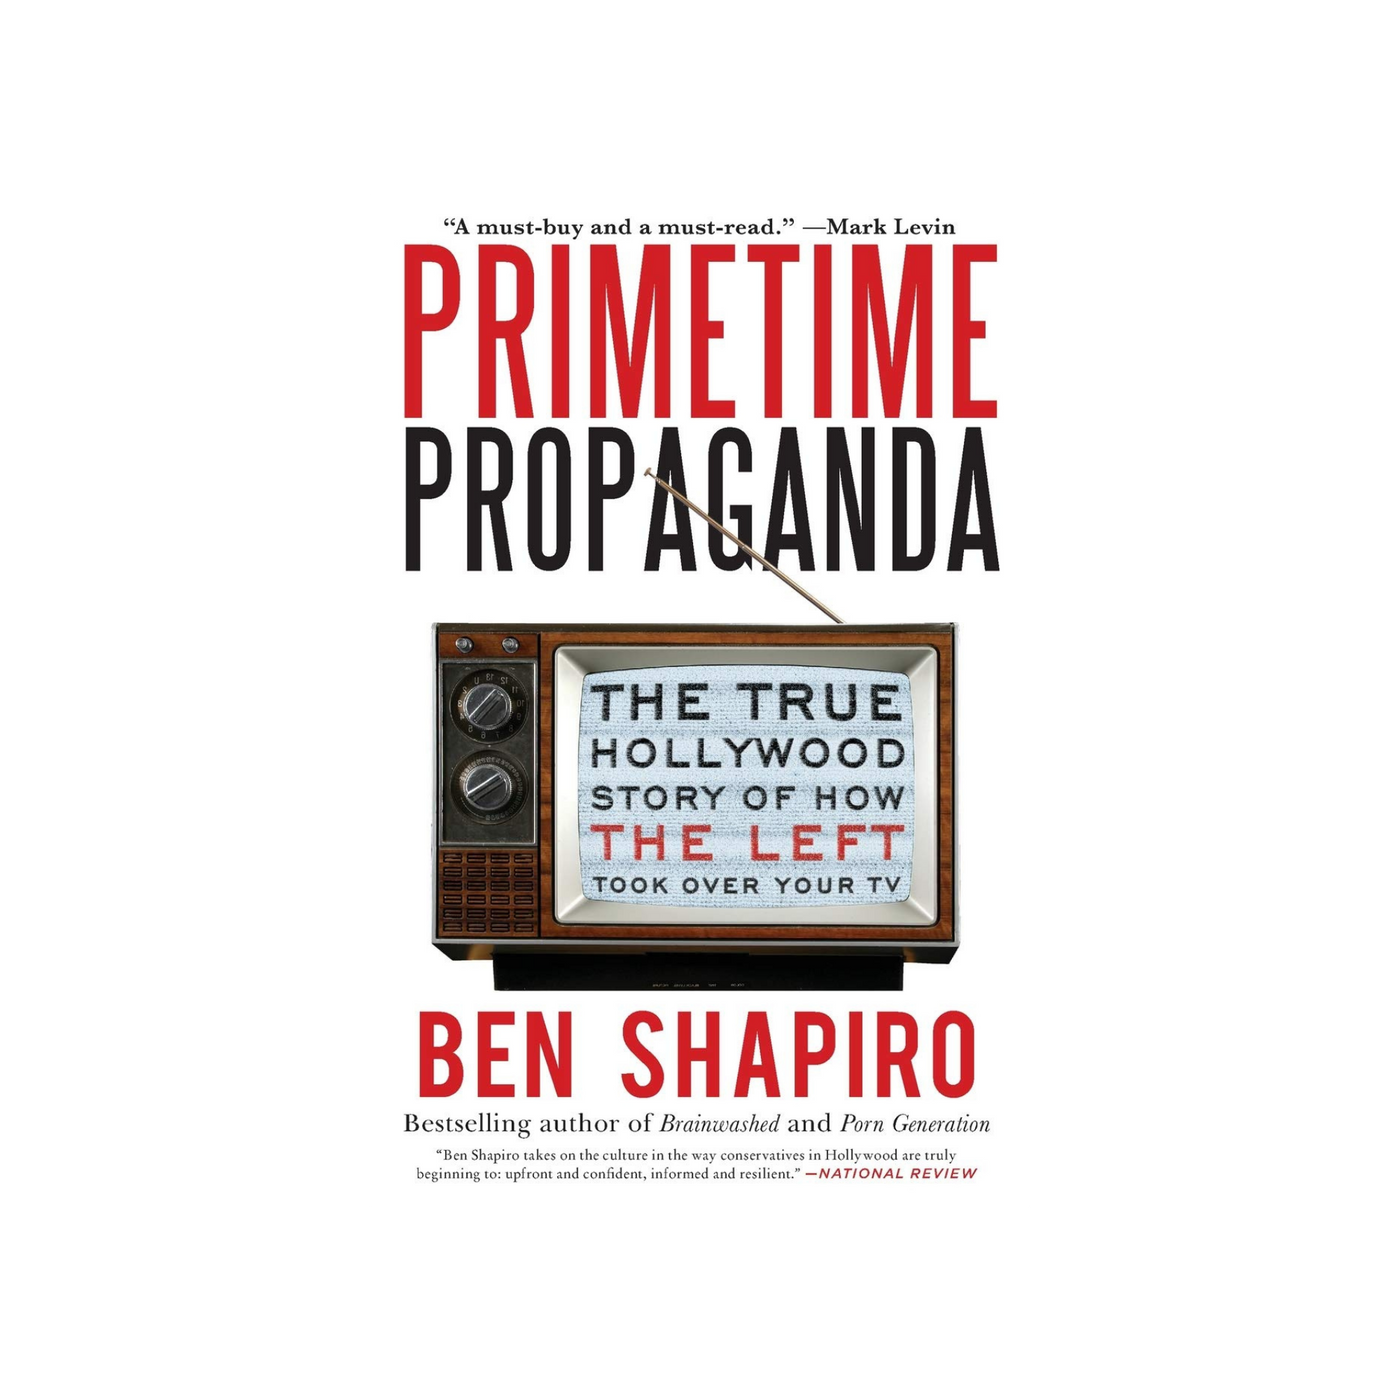 Primetime Propaganda by Ben Shapiro